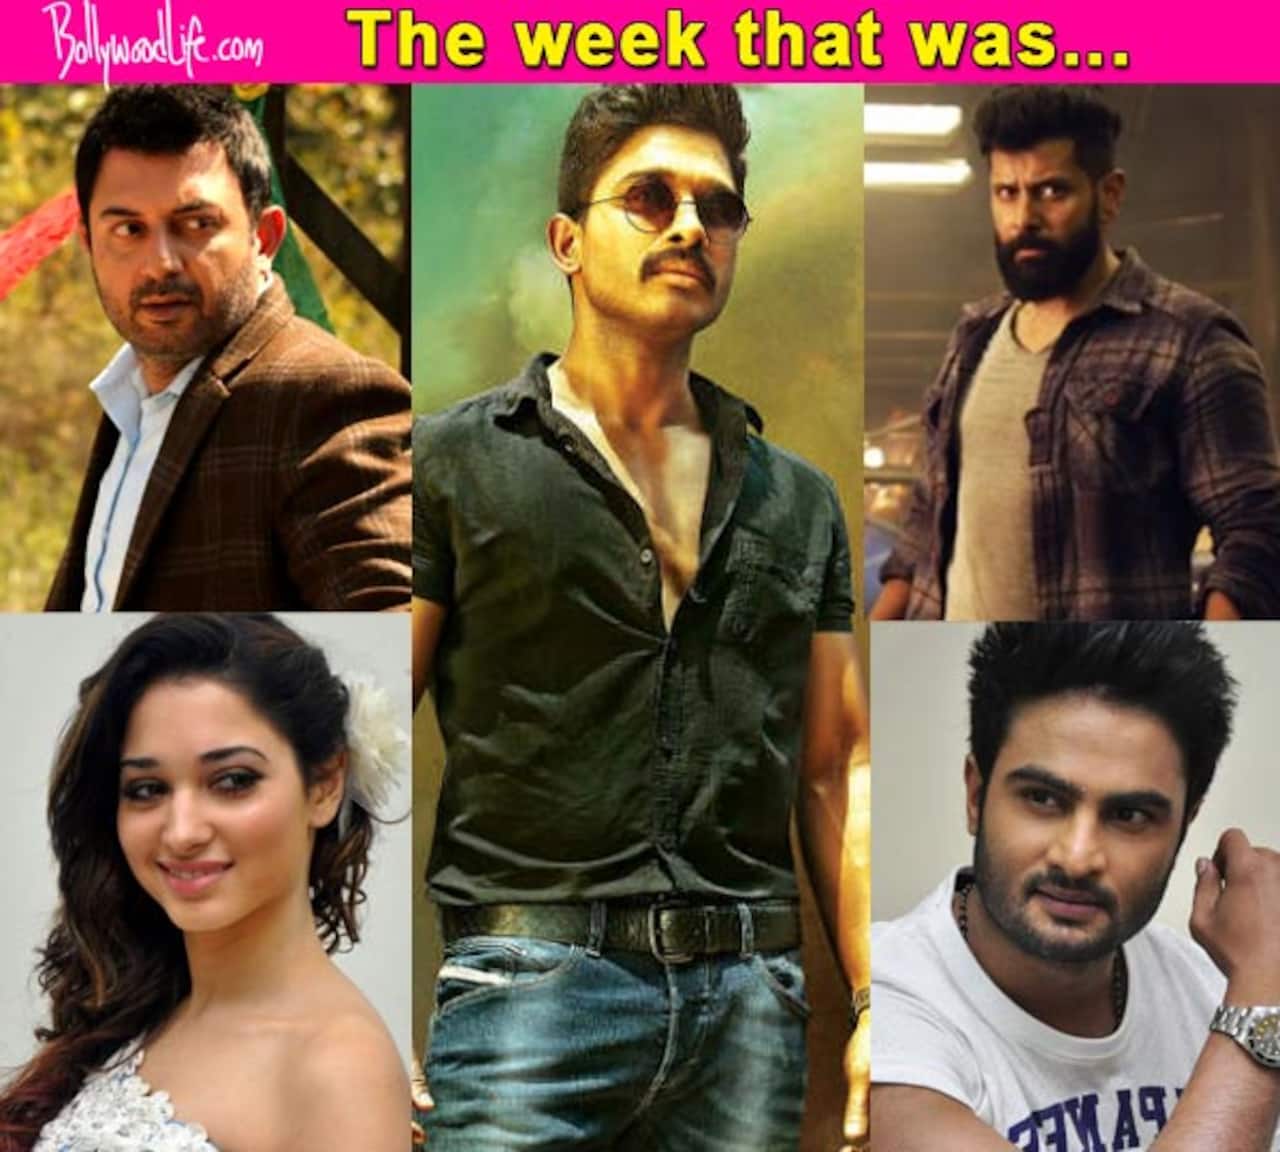 Allu Arjun's Sarrainodu release, Tamannaah Bhatia marriage rumours, Sudheer Babu's Bollywood introduction- here are the top 5 newsmakers of the week!